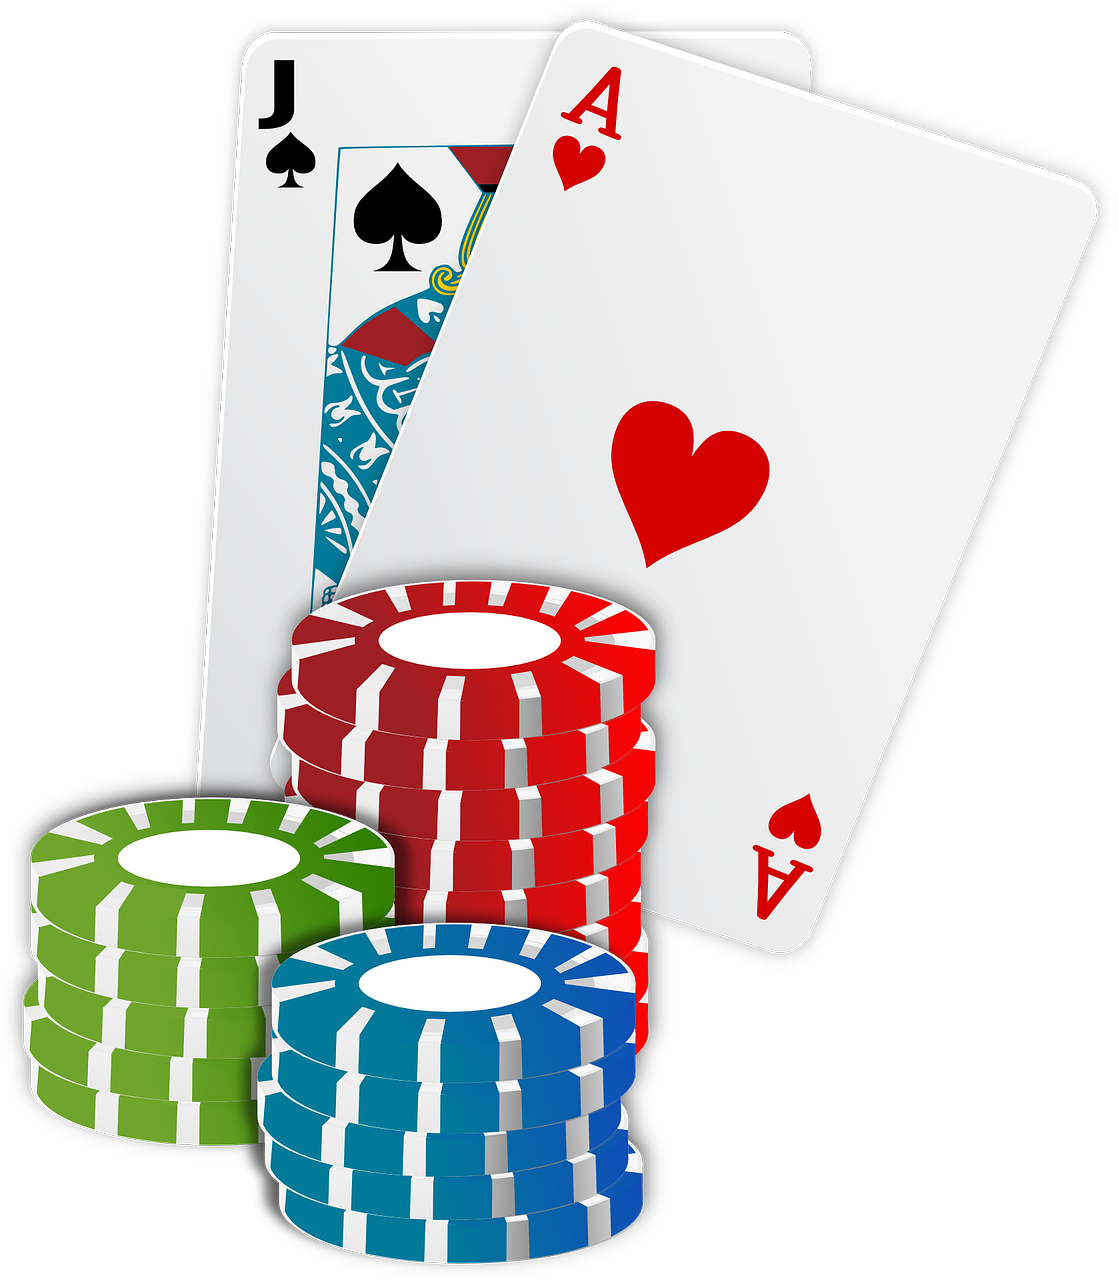 Rhythmic adjacent Refreshing Download free photo of Poker,cards,casino,chips,gambling - from needpix.com